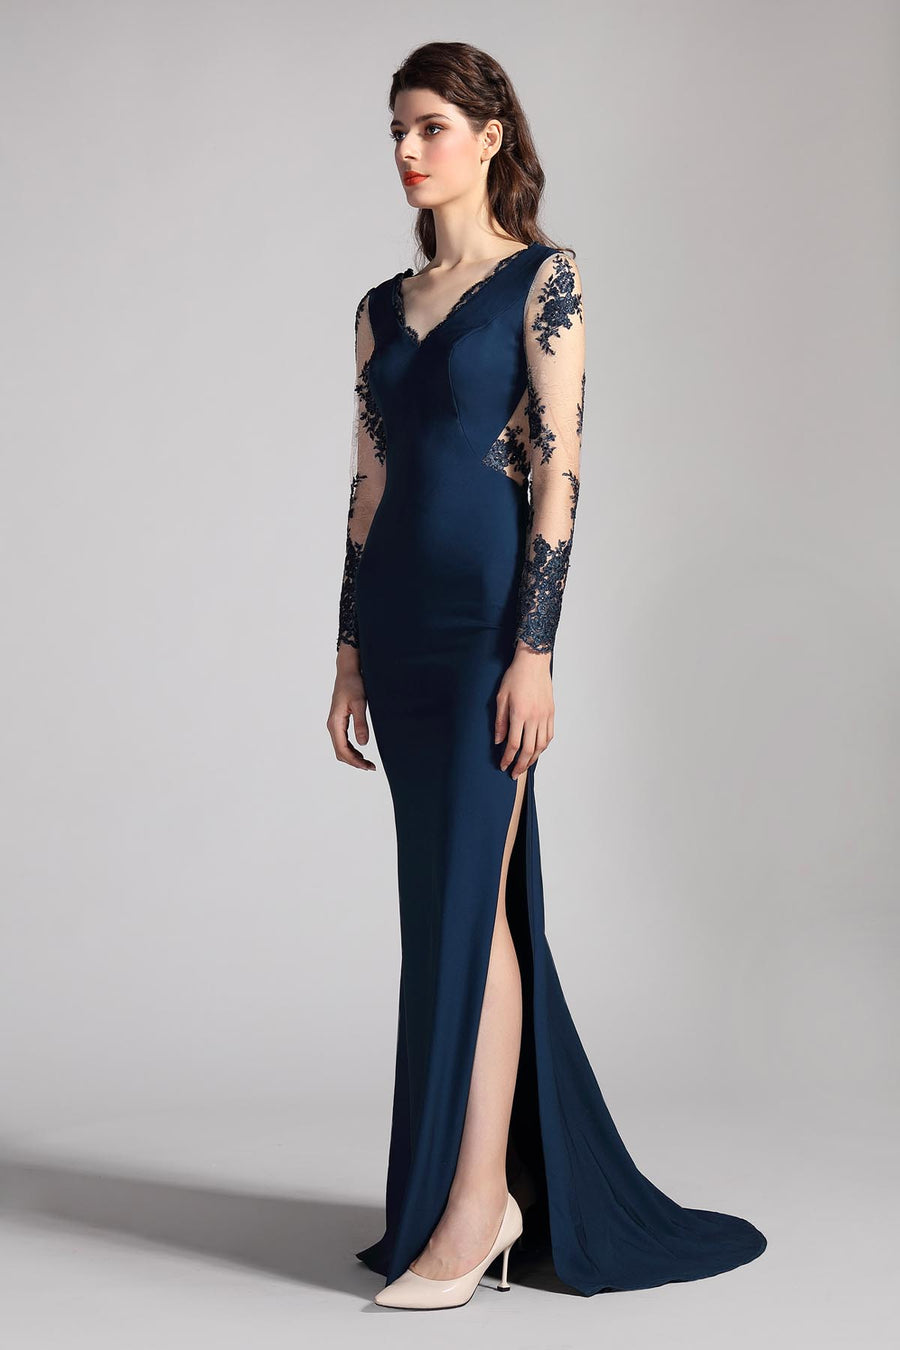 Mermaid/Trumpet V-neck Long Sleeves Full Length Lace Promo Dresses